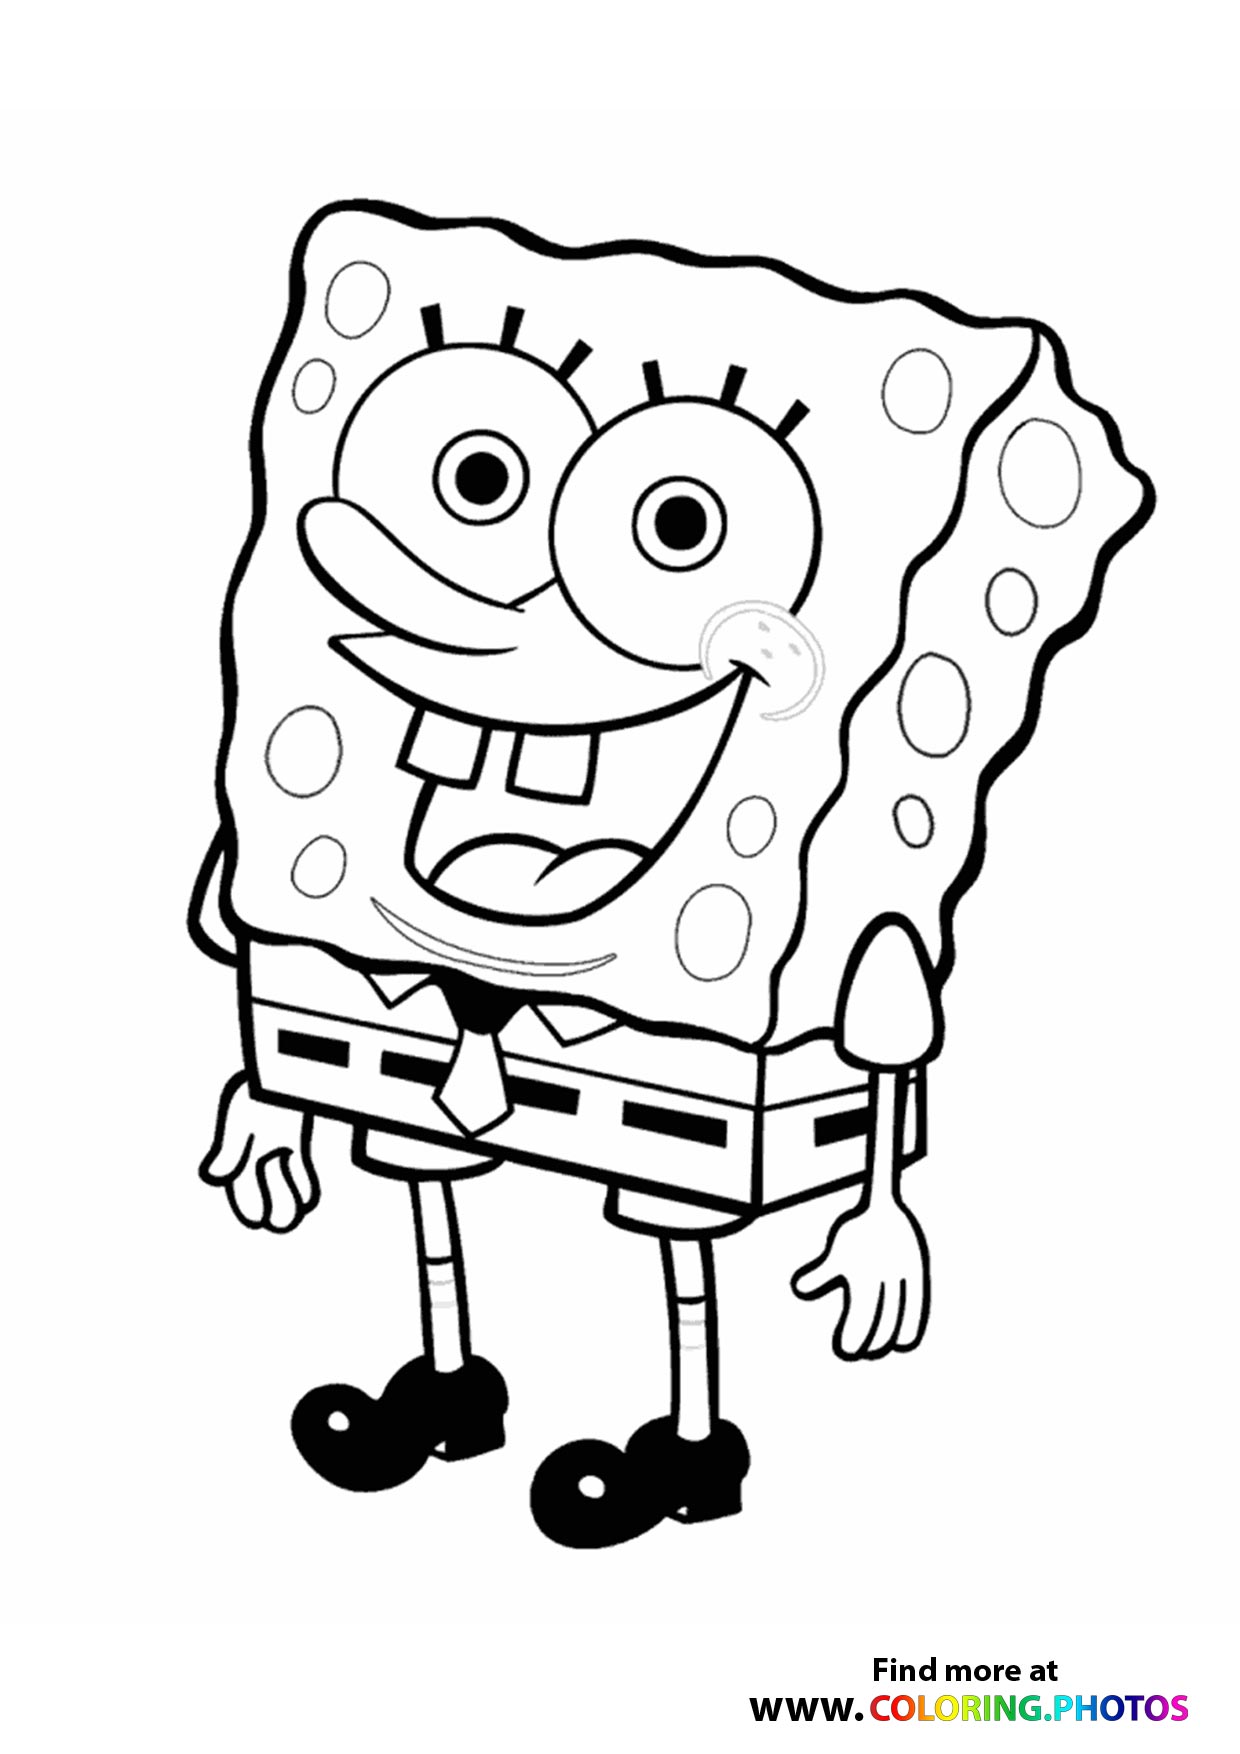 SpongeBob Adult Coloring Page